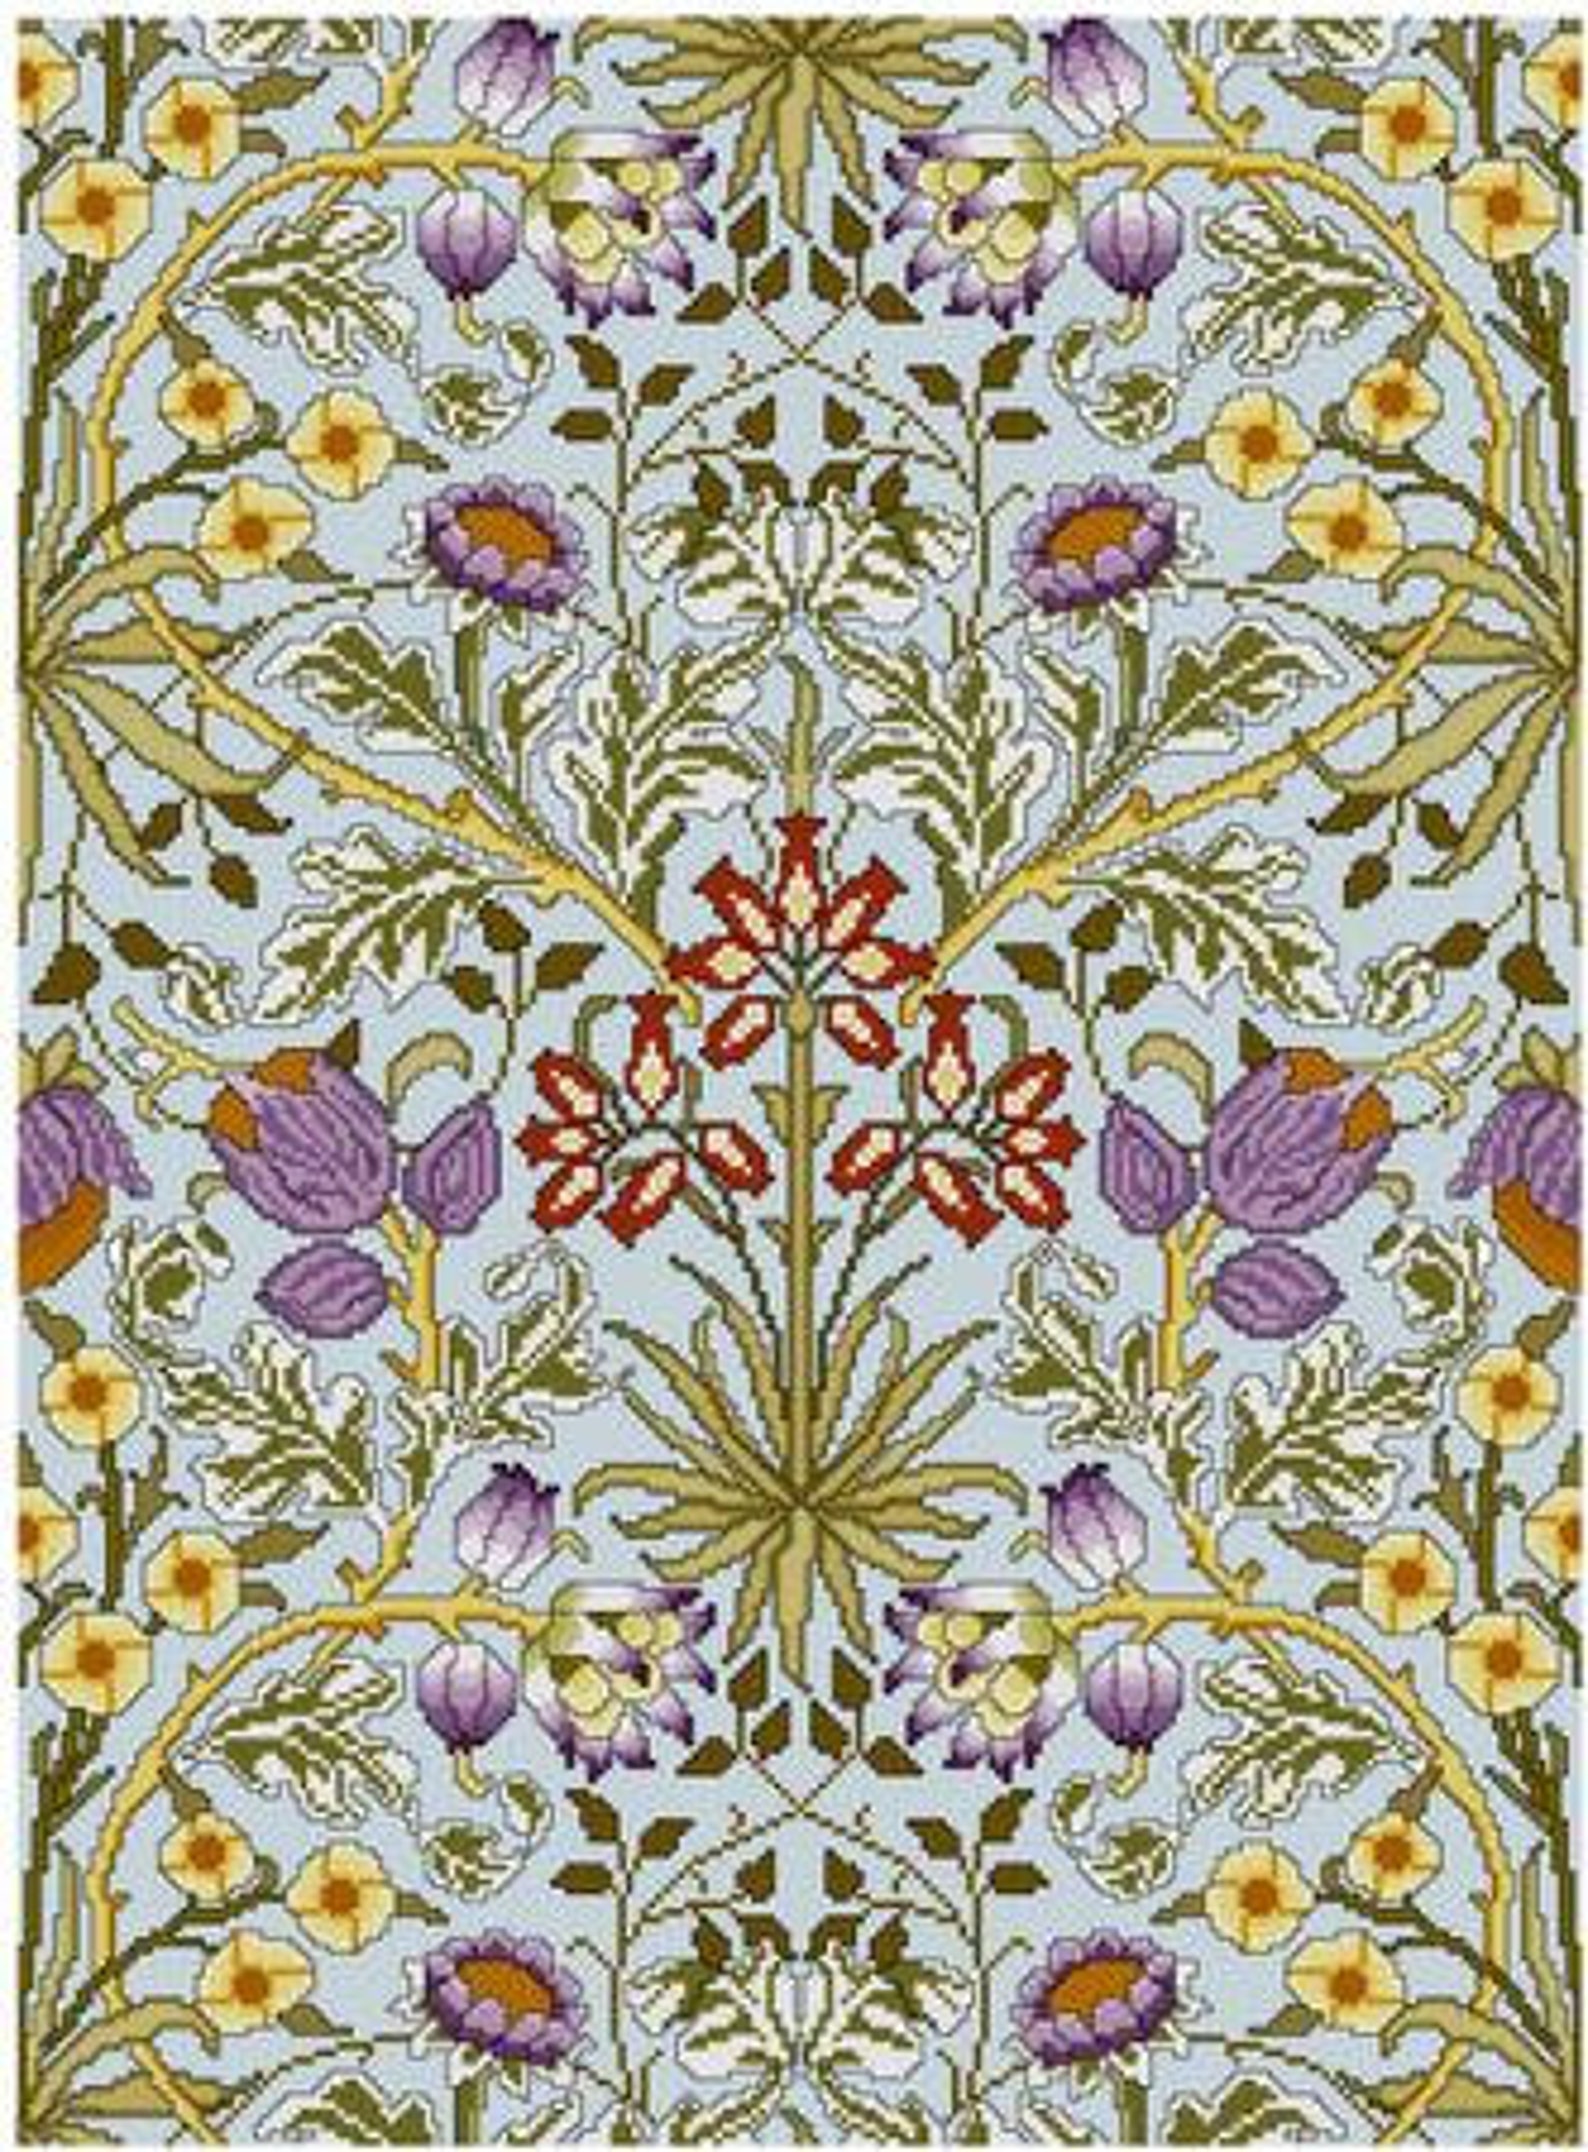 William Morris Hyacinth Wallpaper Design Cross Stitch Pattern Etsy